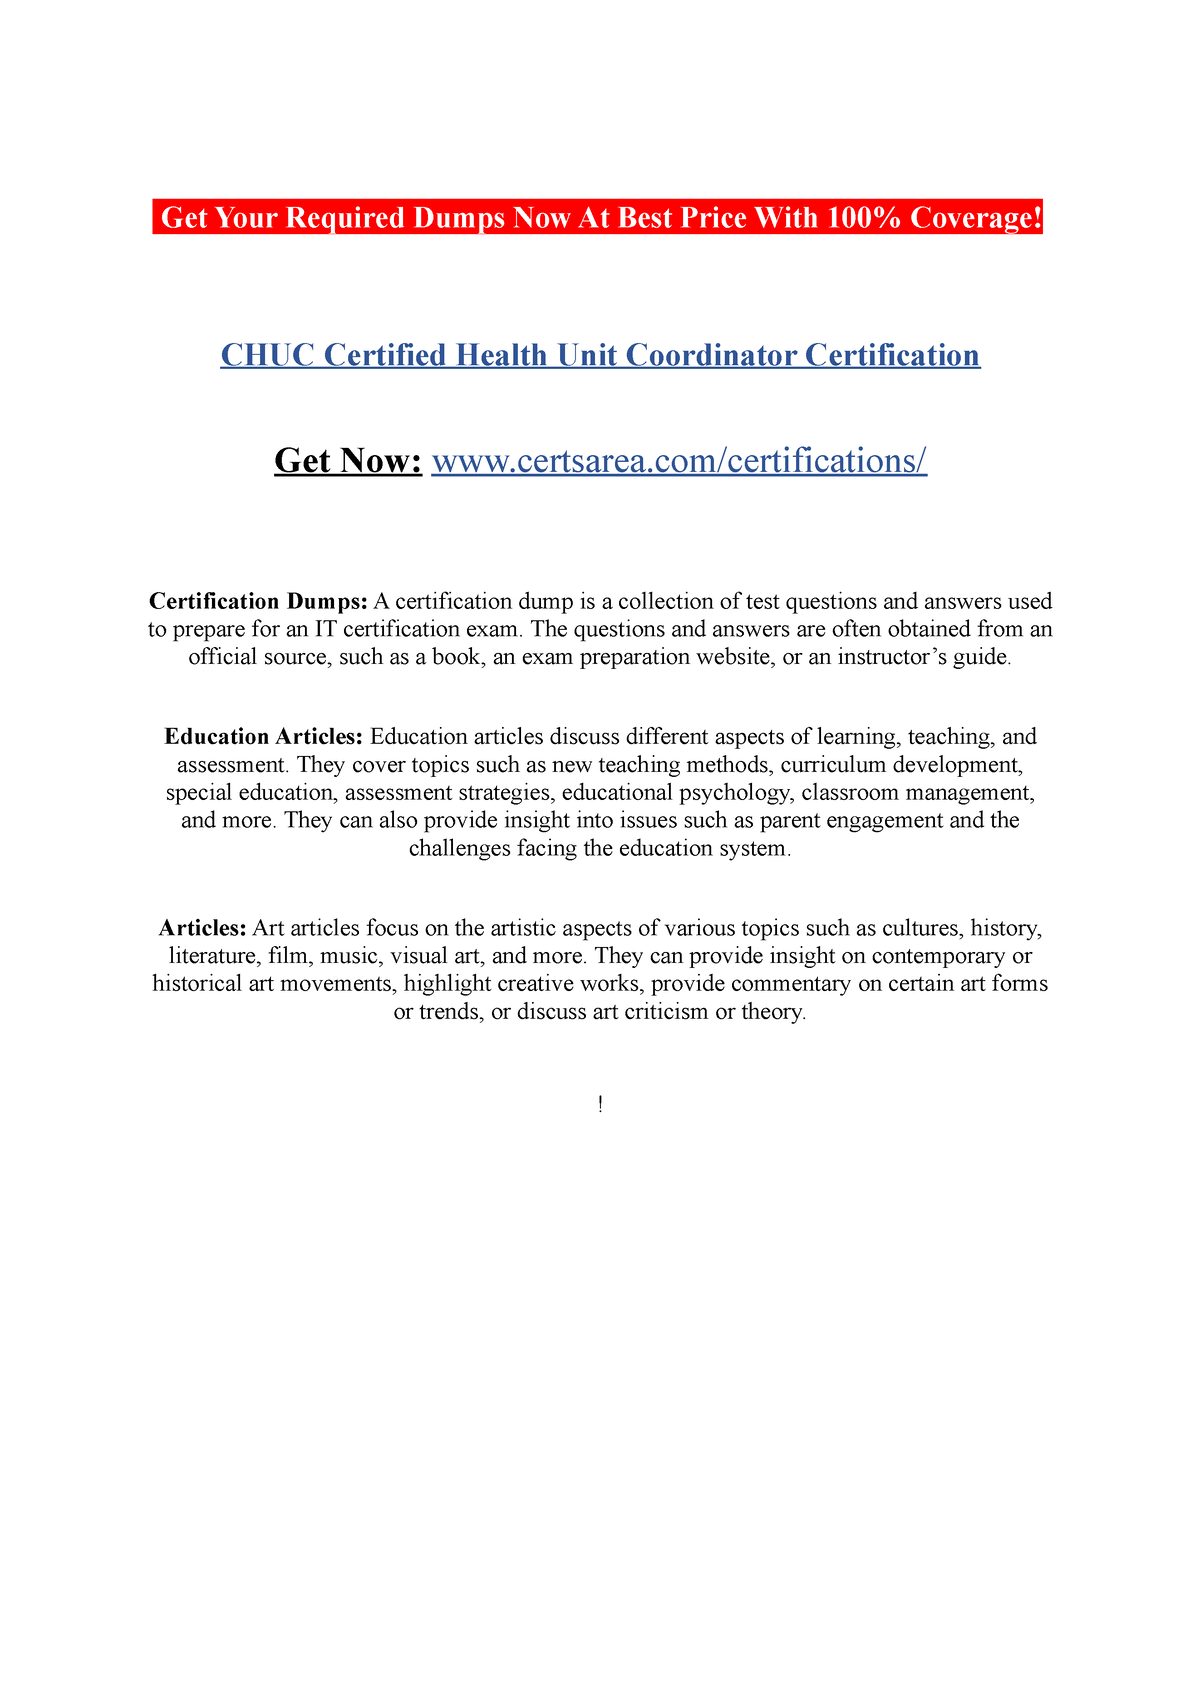 CHUC Certified Health Unit Coordinator Certification Get Your